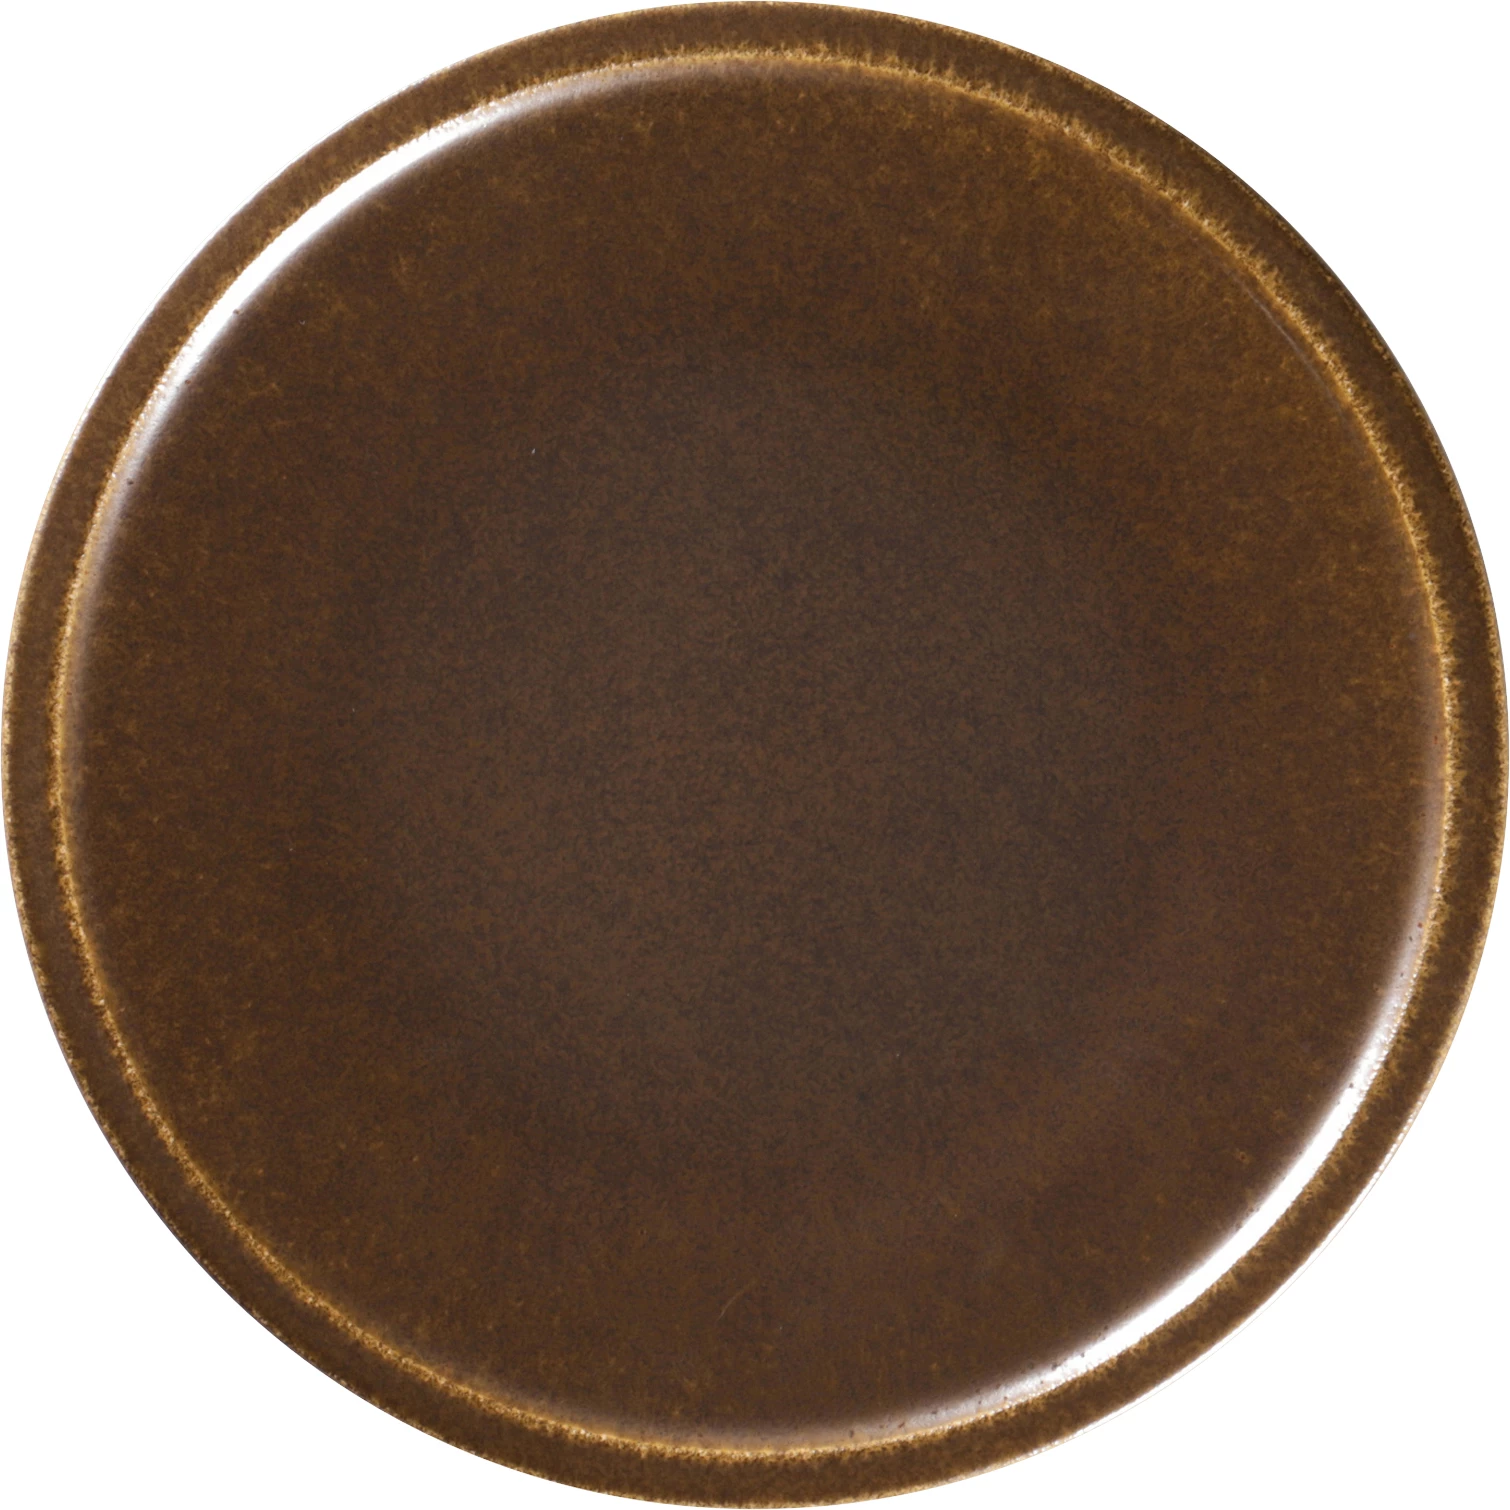 RAK Ease flad tallerken, rust, ø28 cm